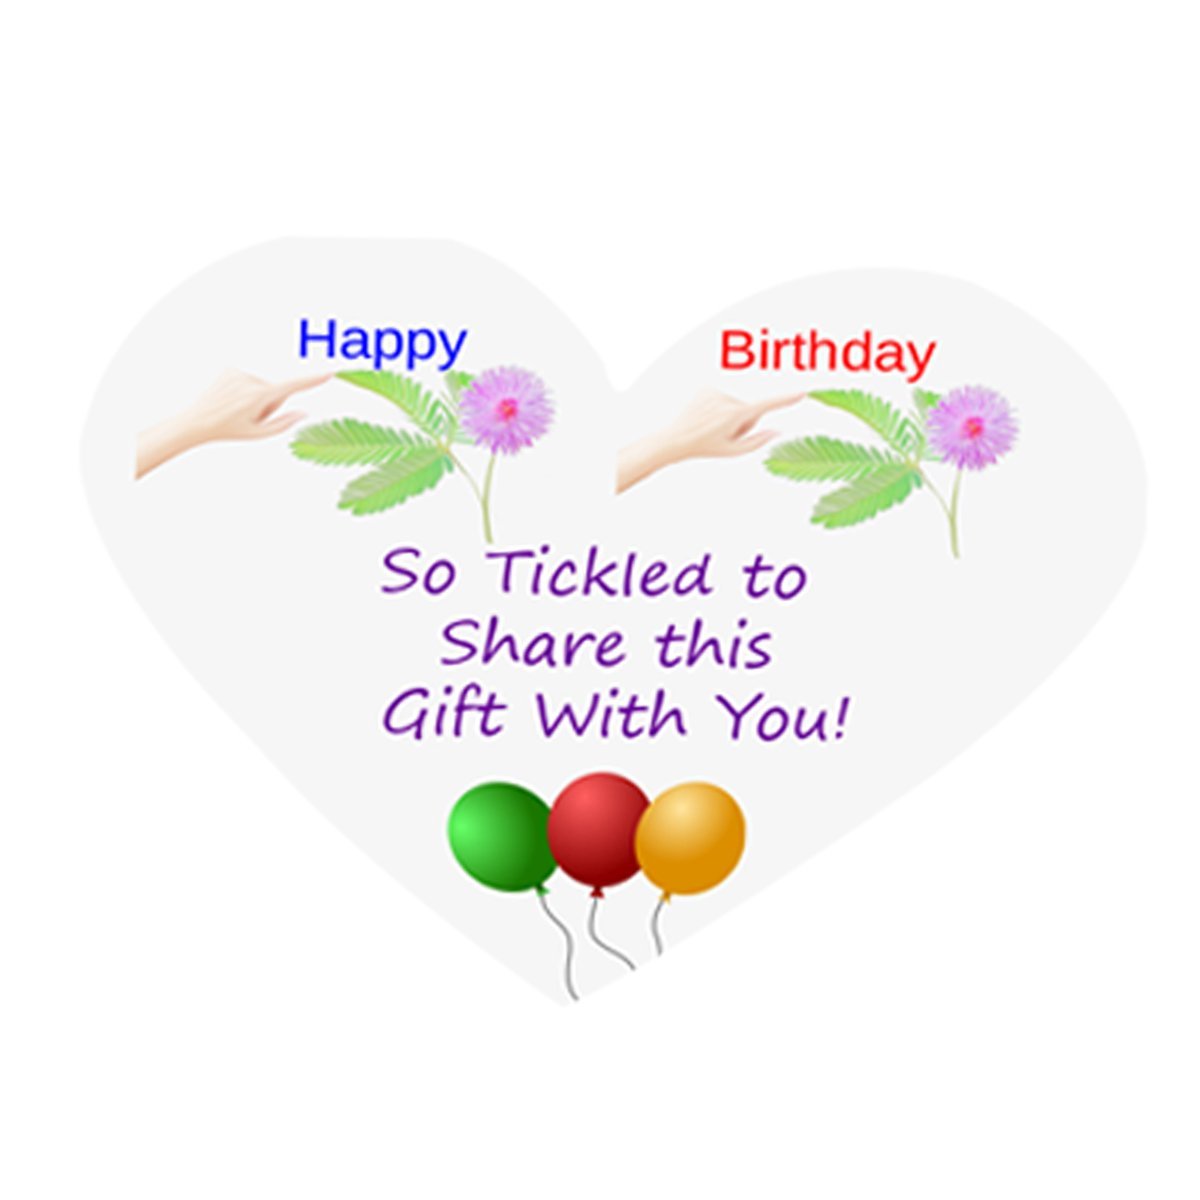 NEW! Birthday TickleMe Plant Gift Box Set! - TickleMe Plant Company, Inc